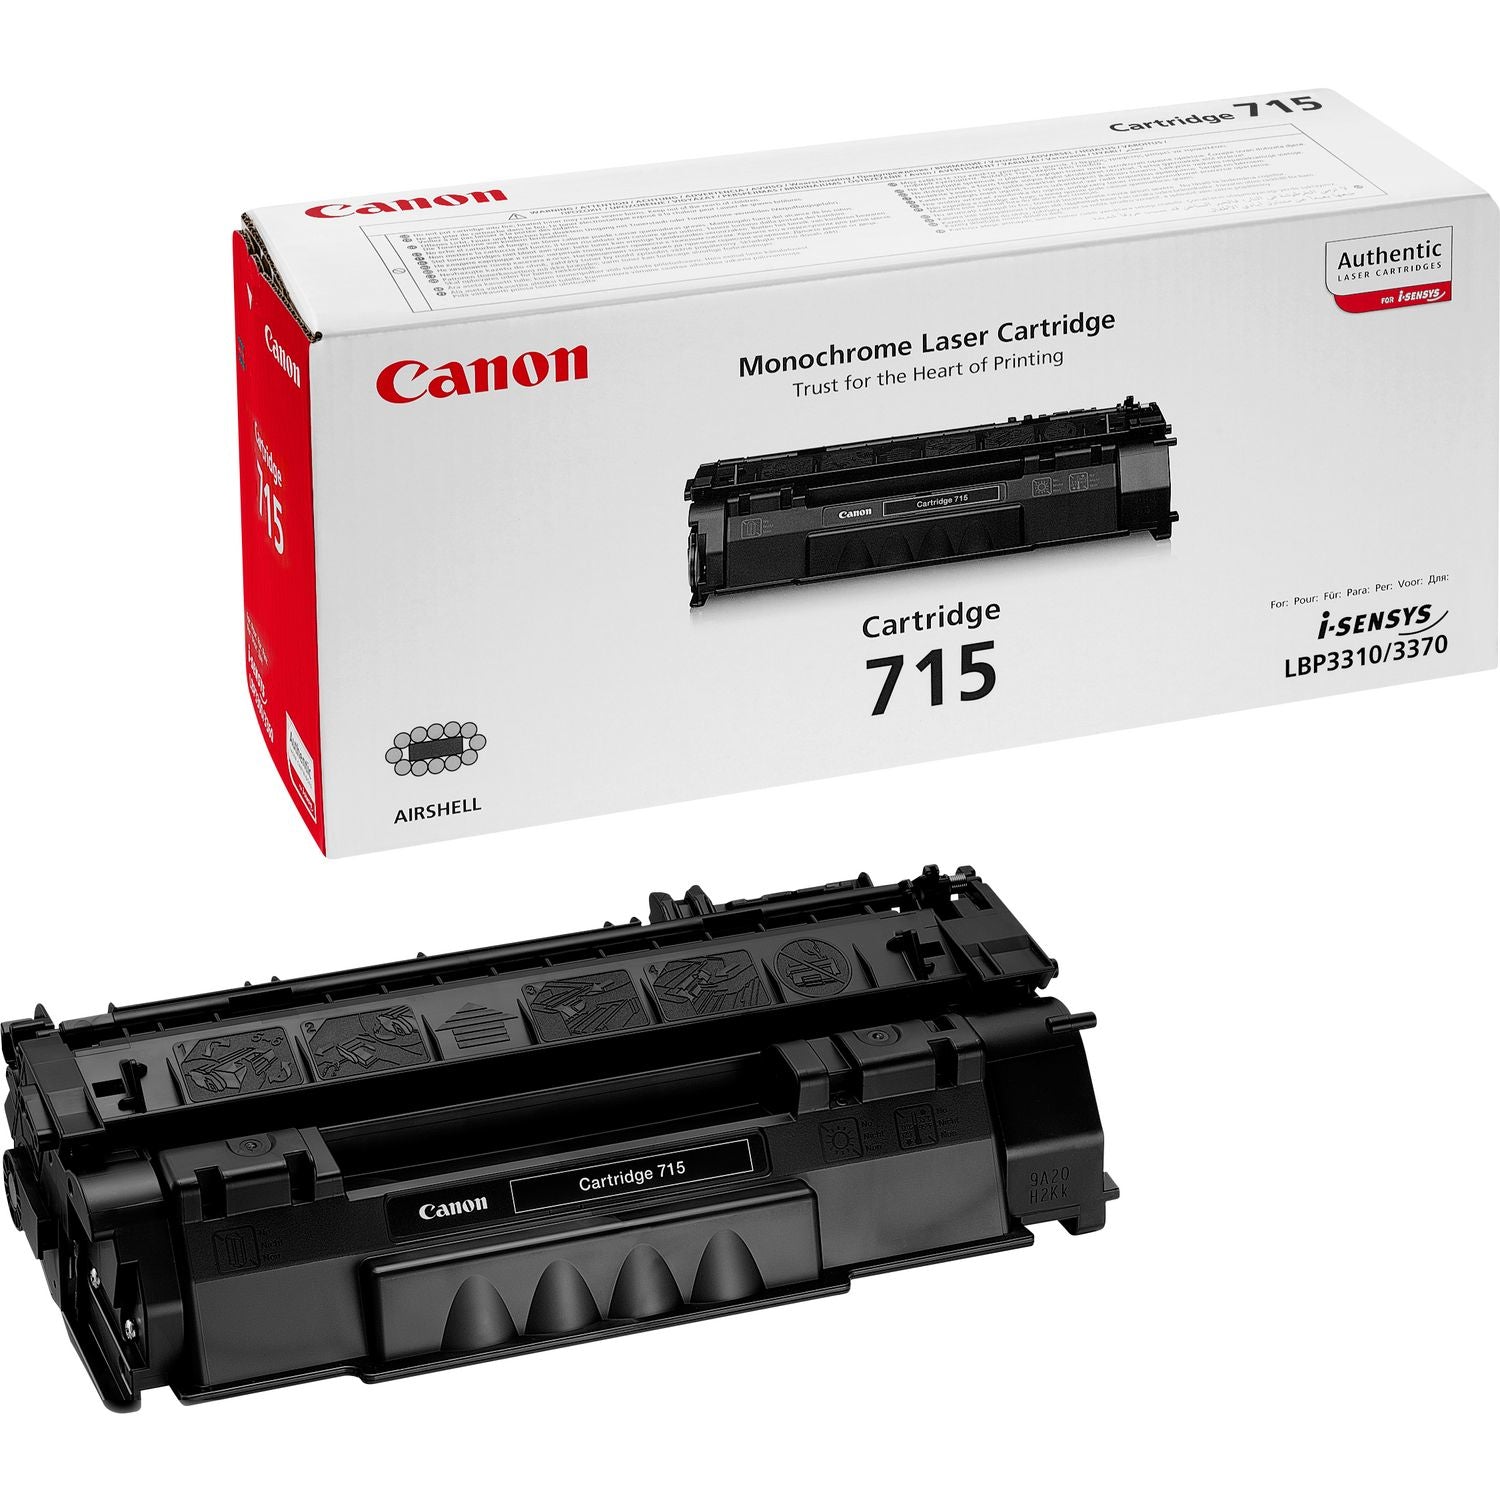 Canon 1975B002/715 Toner cartridge, 3.5K pages/5% for Canon LBP-3310